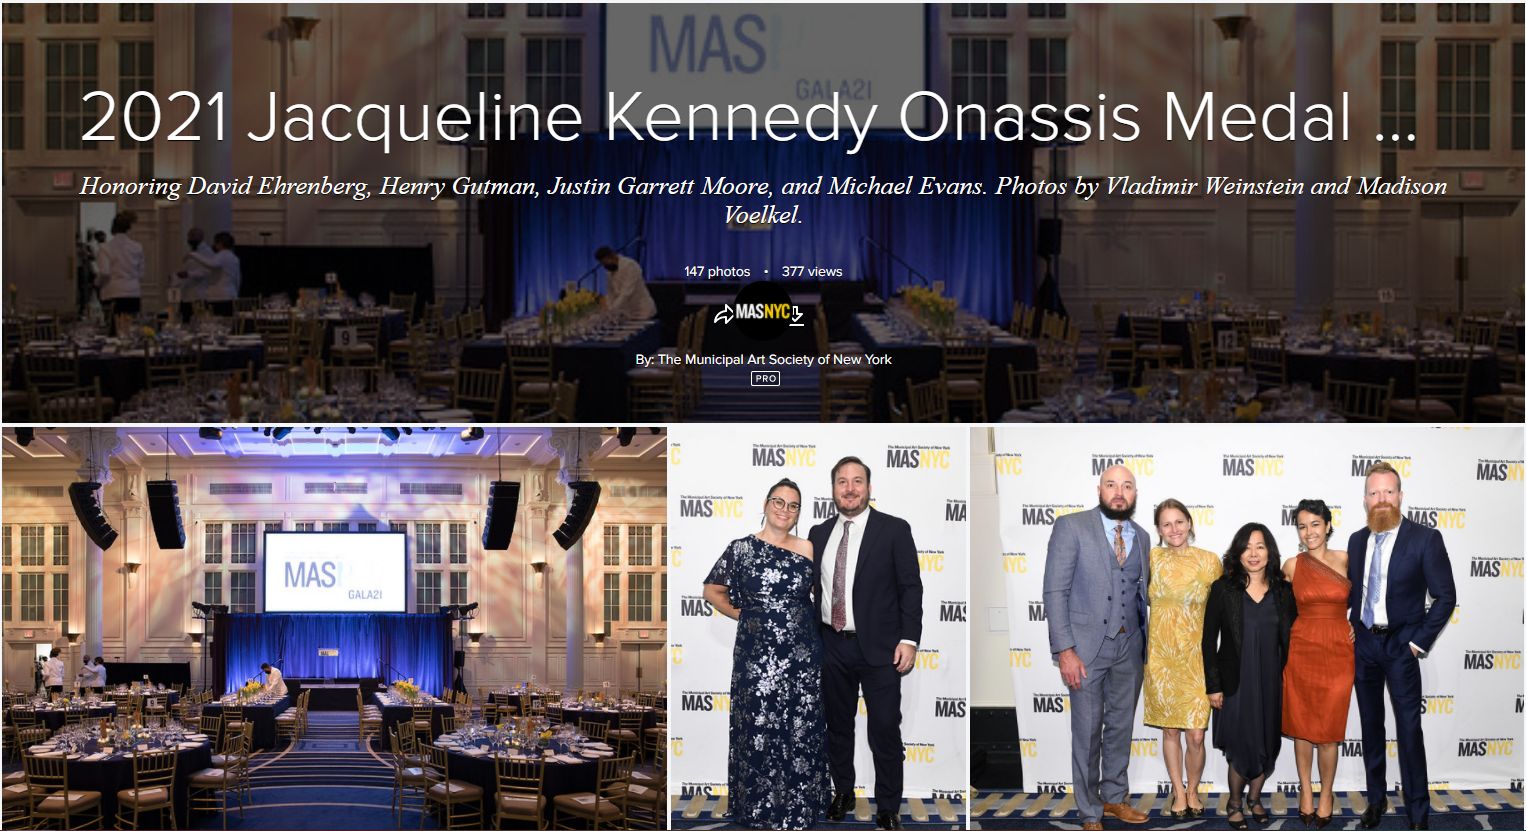 2021 Jacqueline Kennedy Onassis Medal ... Honoring David Ehrenberg, Henry Gutman, Justin Garrett Moore, and Michael Evans. Photos by Vladimir Weinstein and Madison Voelkel.